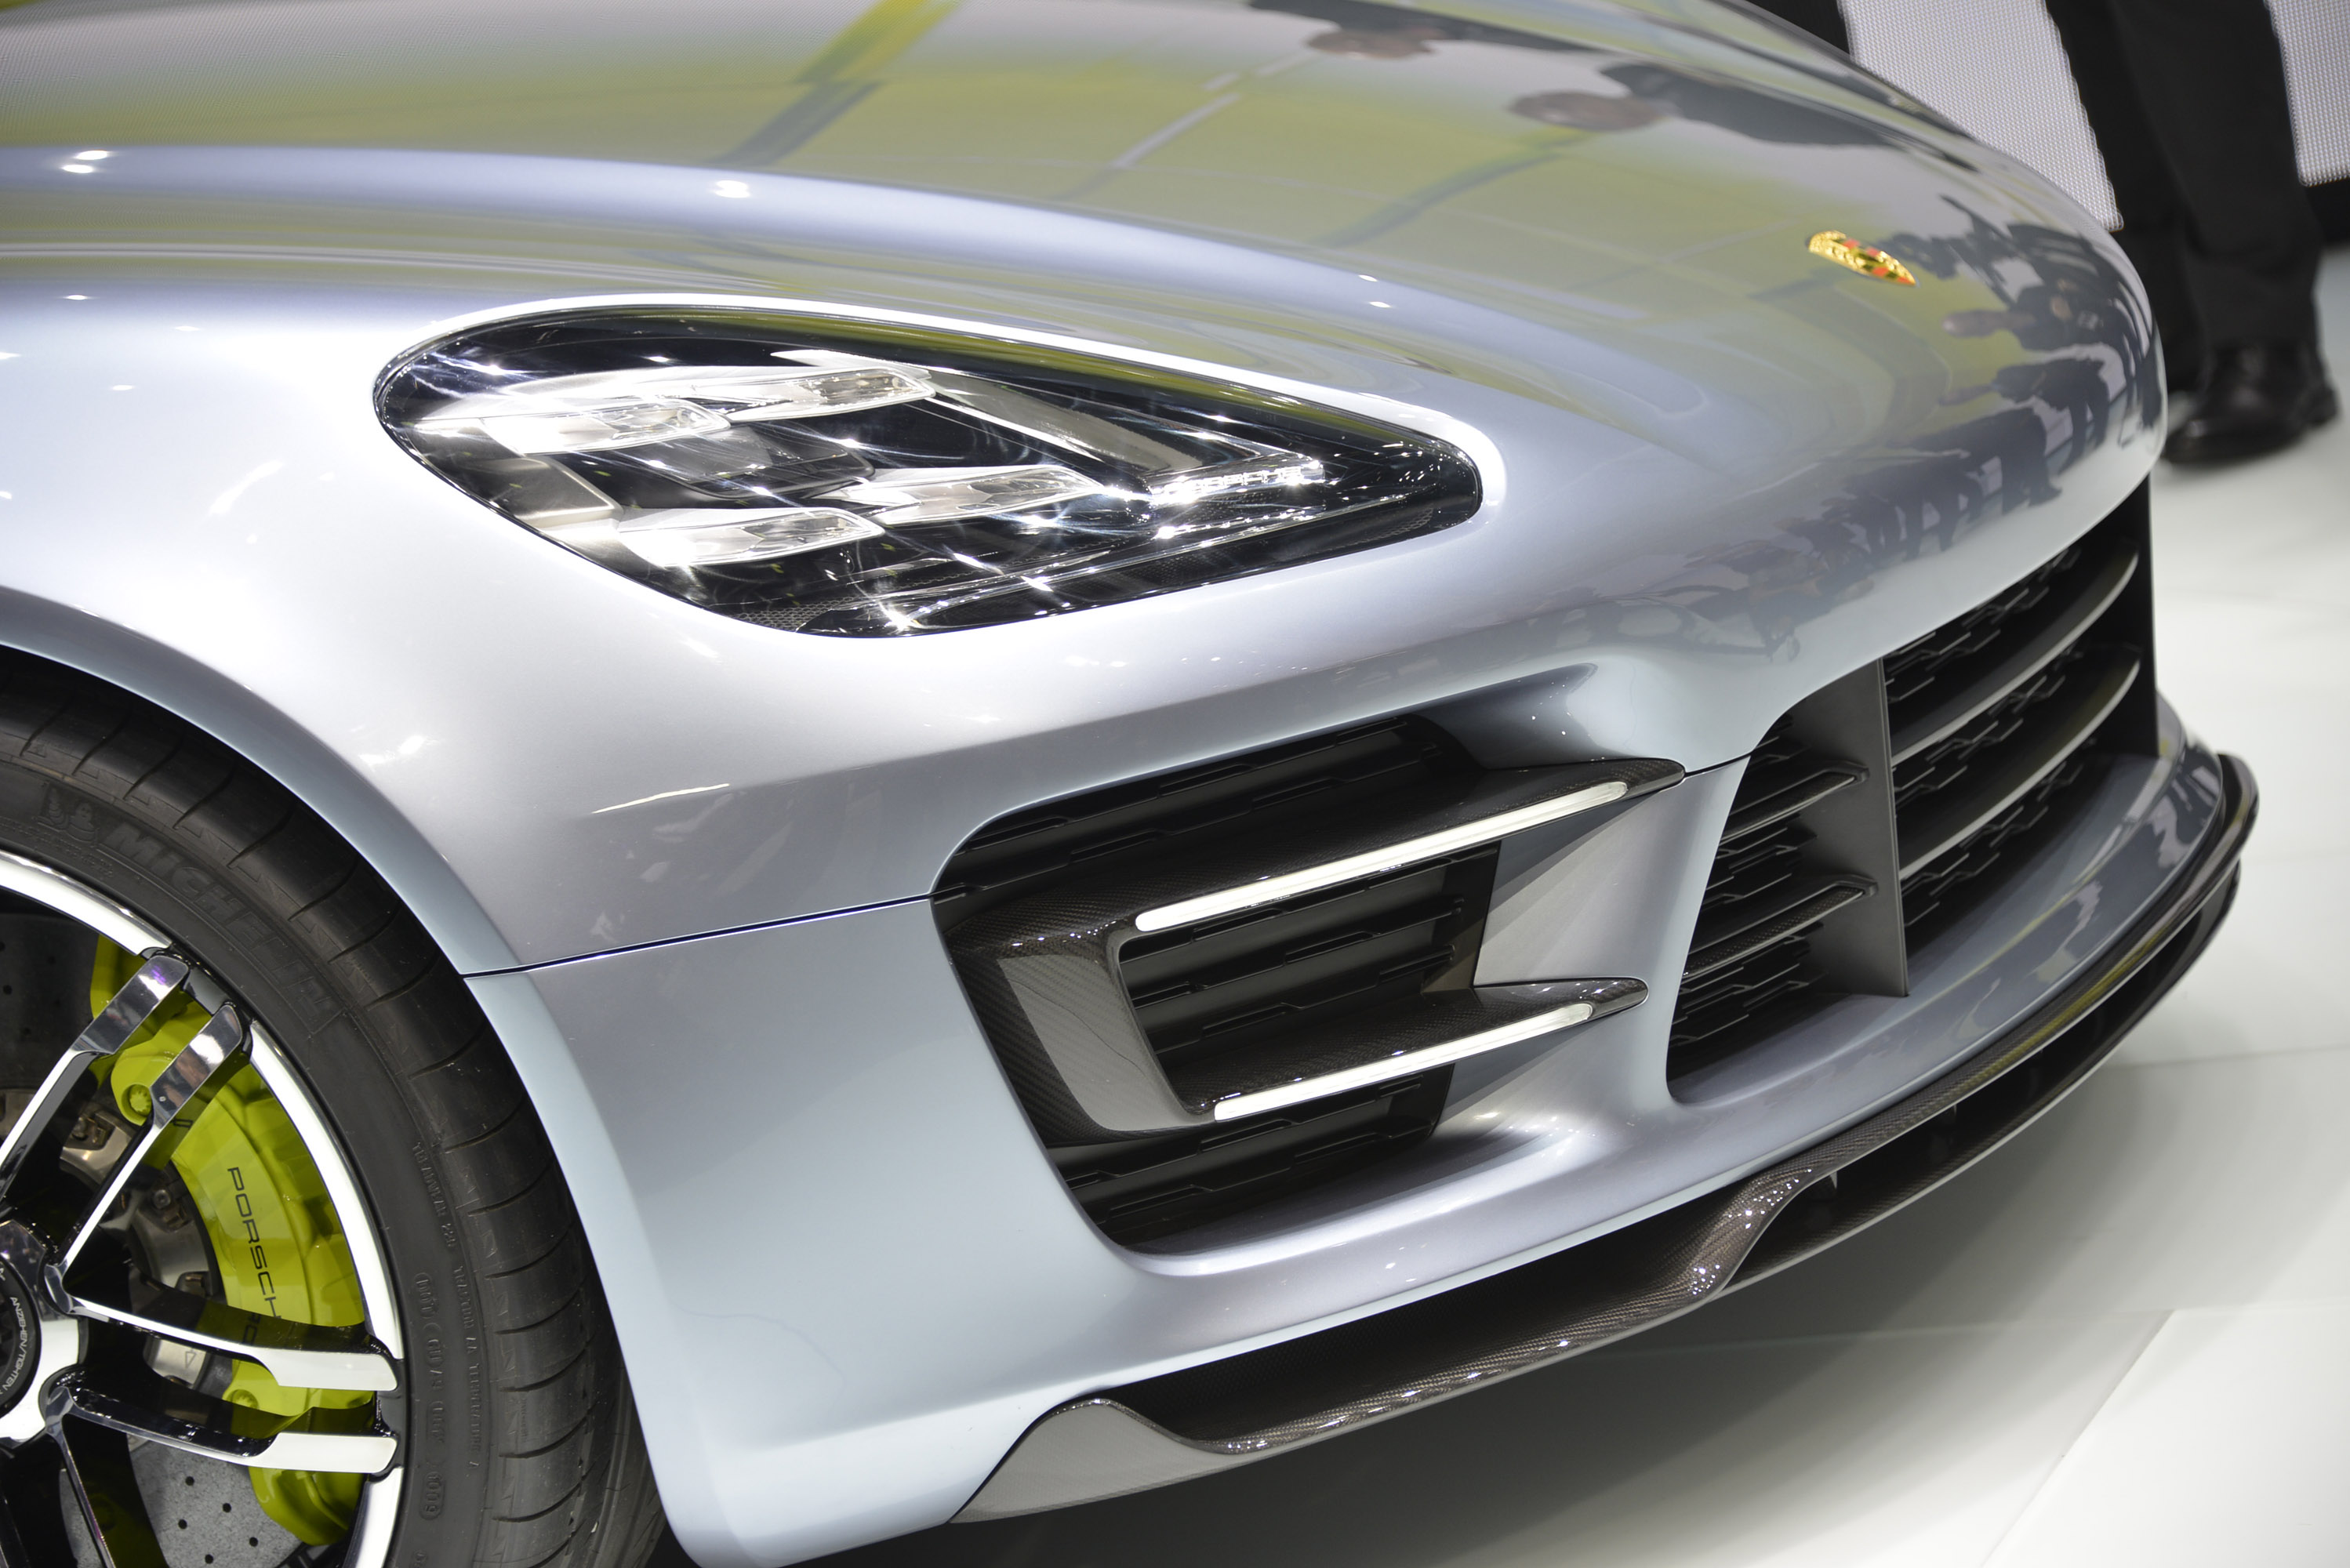 2012 Porsche Panamera Sport Turismo Concept